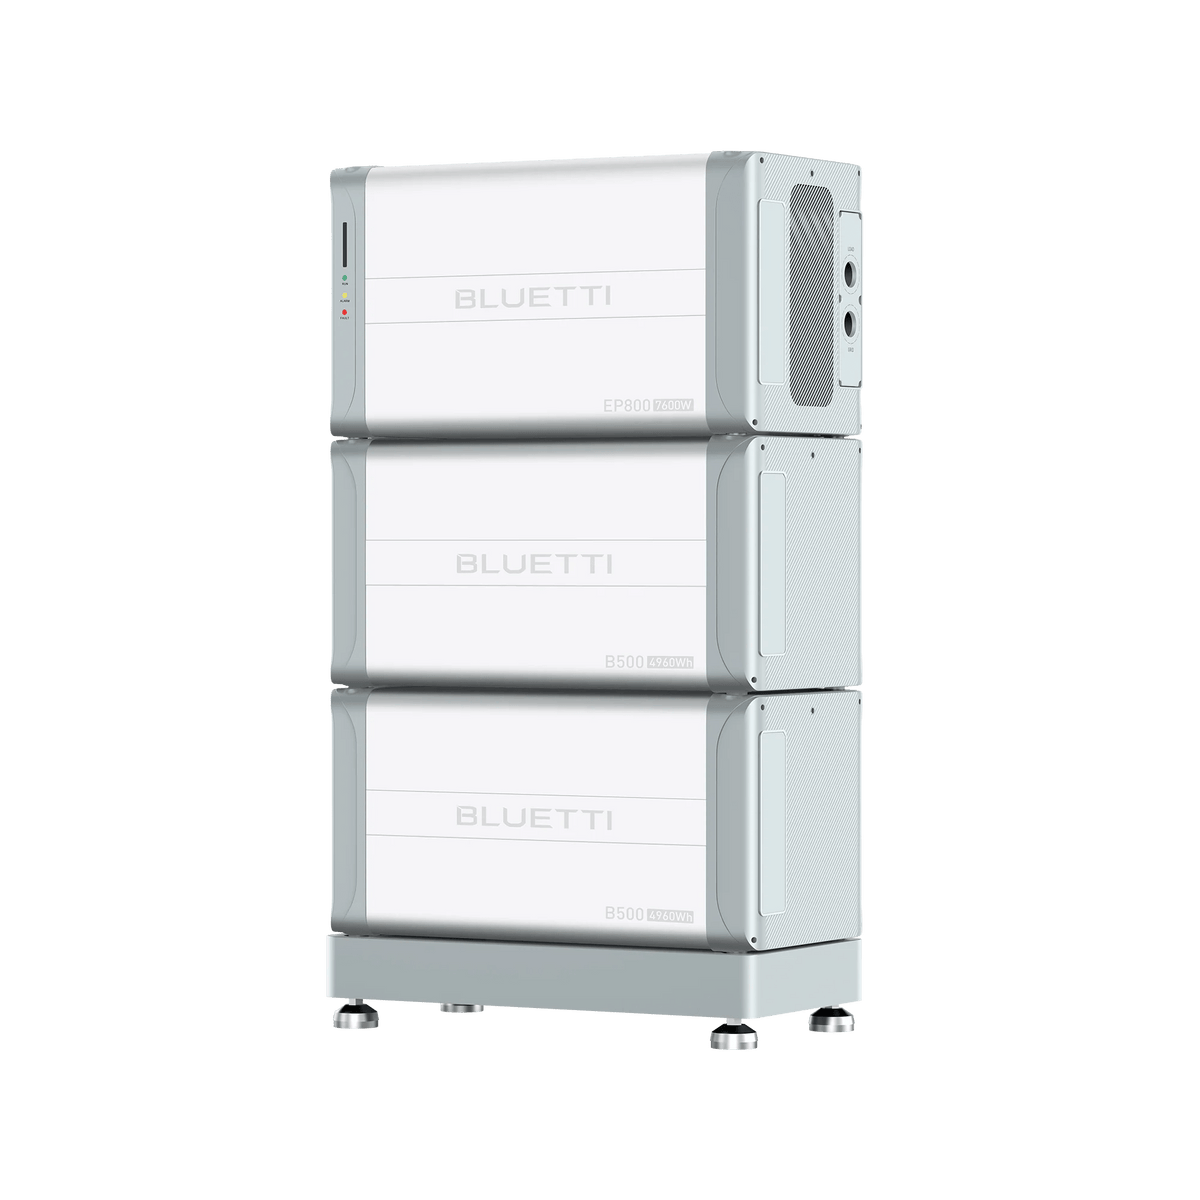 Bluetti Home Integration Kit EP800+2*B500 Bluetti EP800+B500 Home Battery Backup